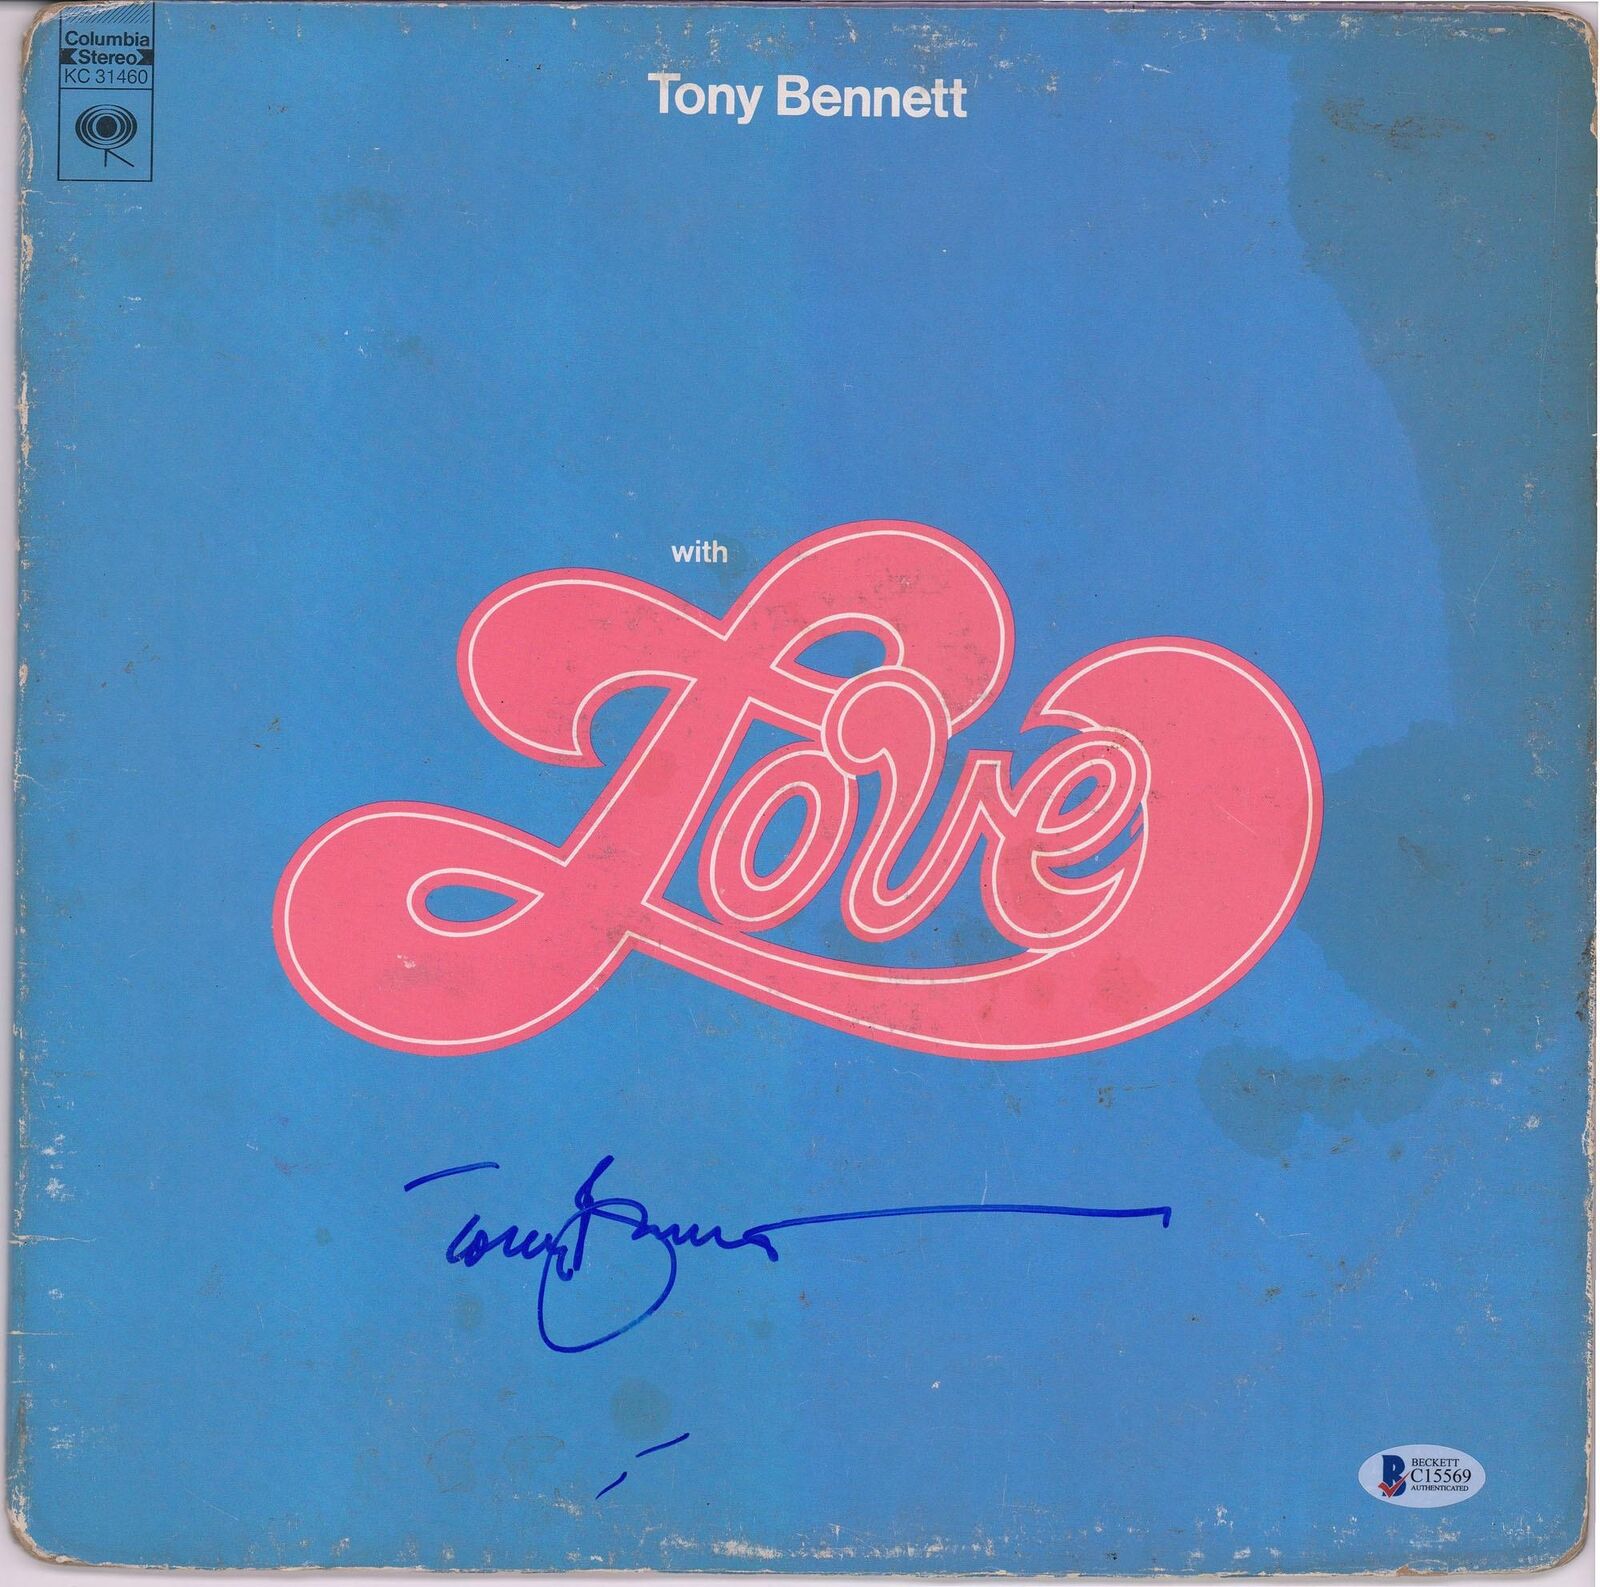 Tony Bennett Autographed With Love Album Cover Beckett COA